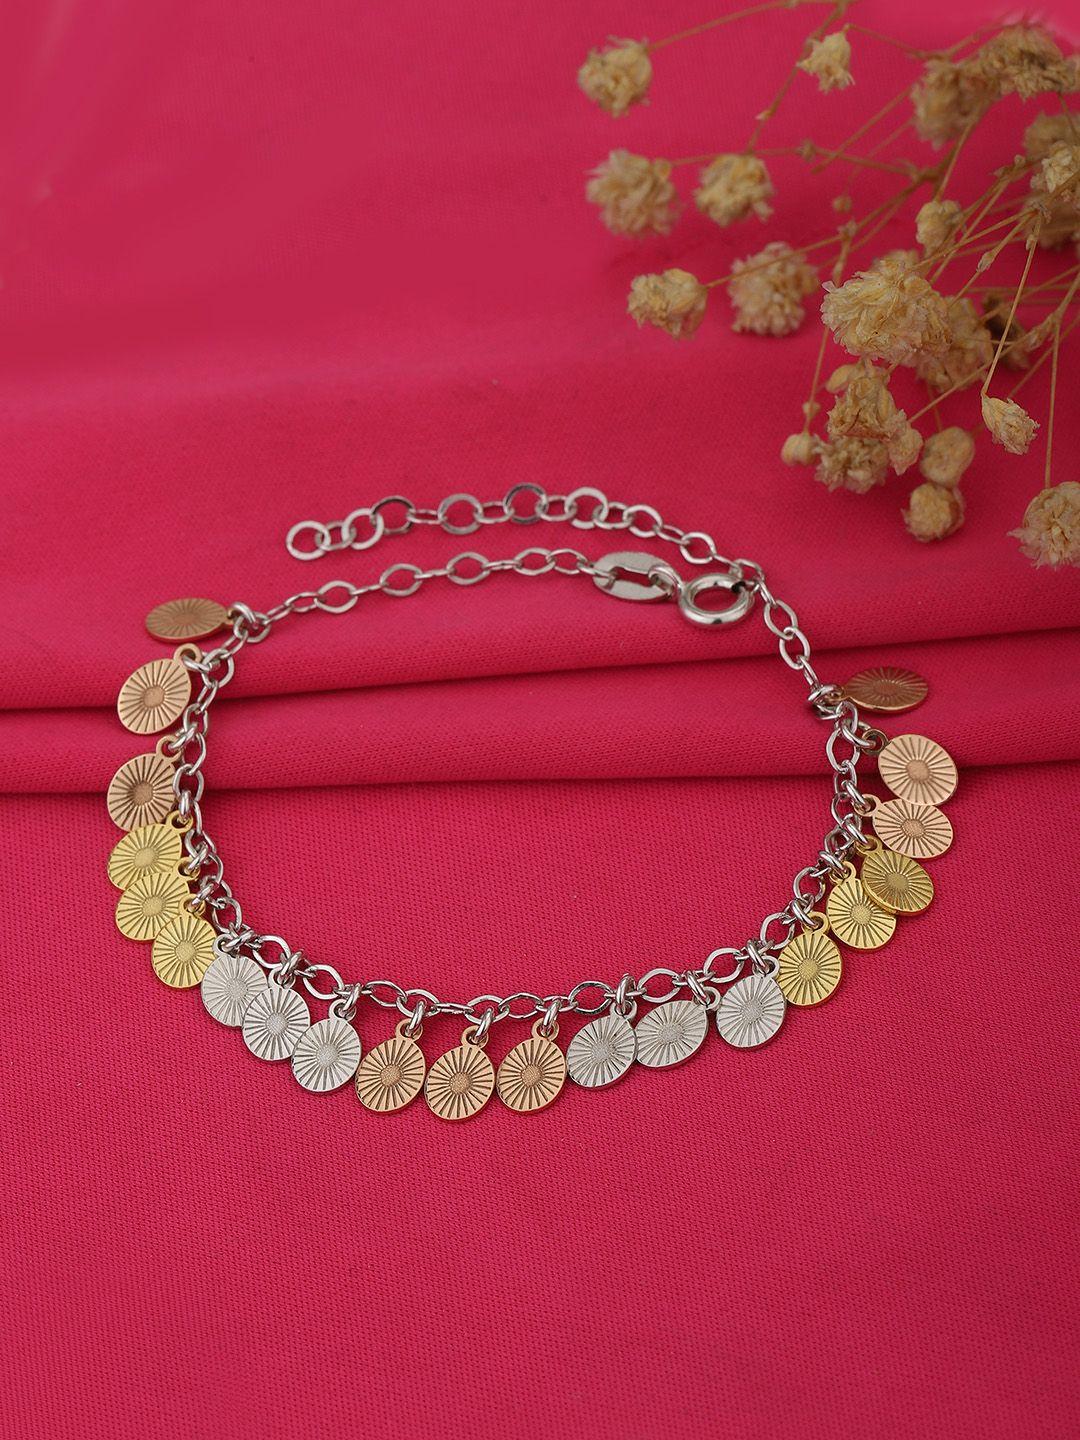 carlton london women silver-toned & gold-toned rhodium-plated charm bracelet